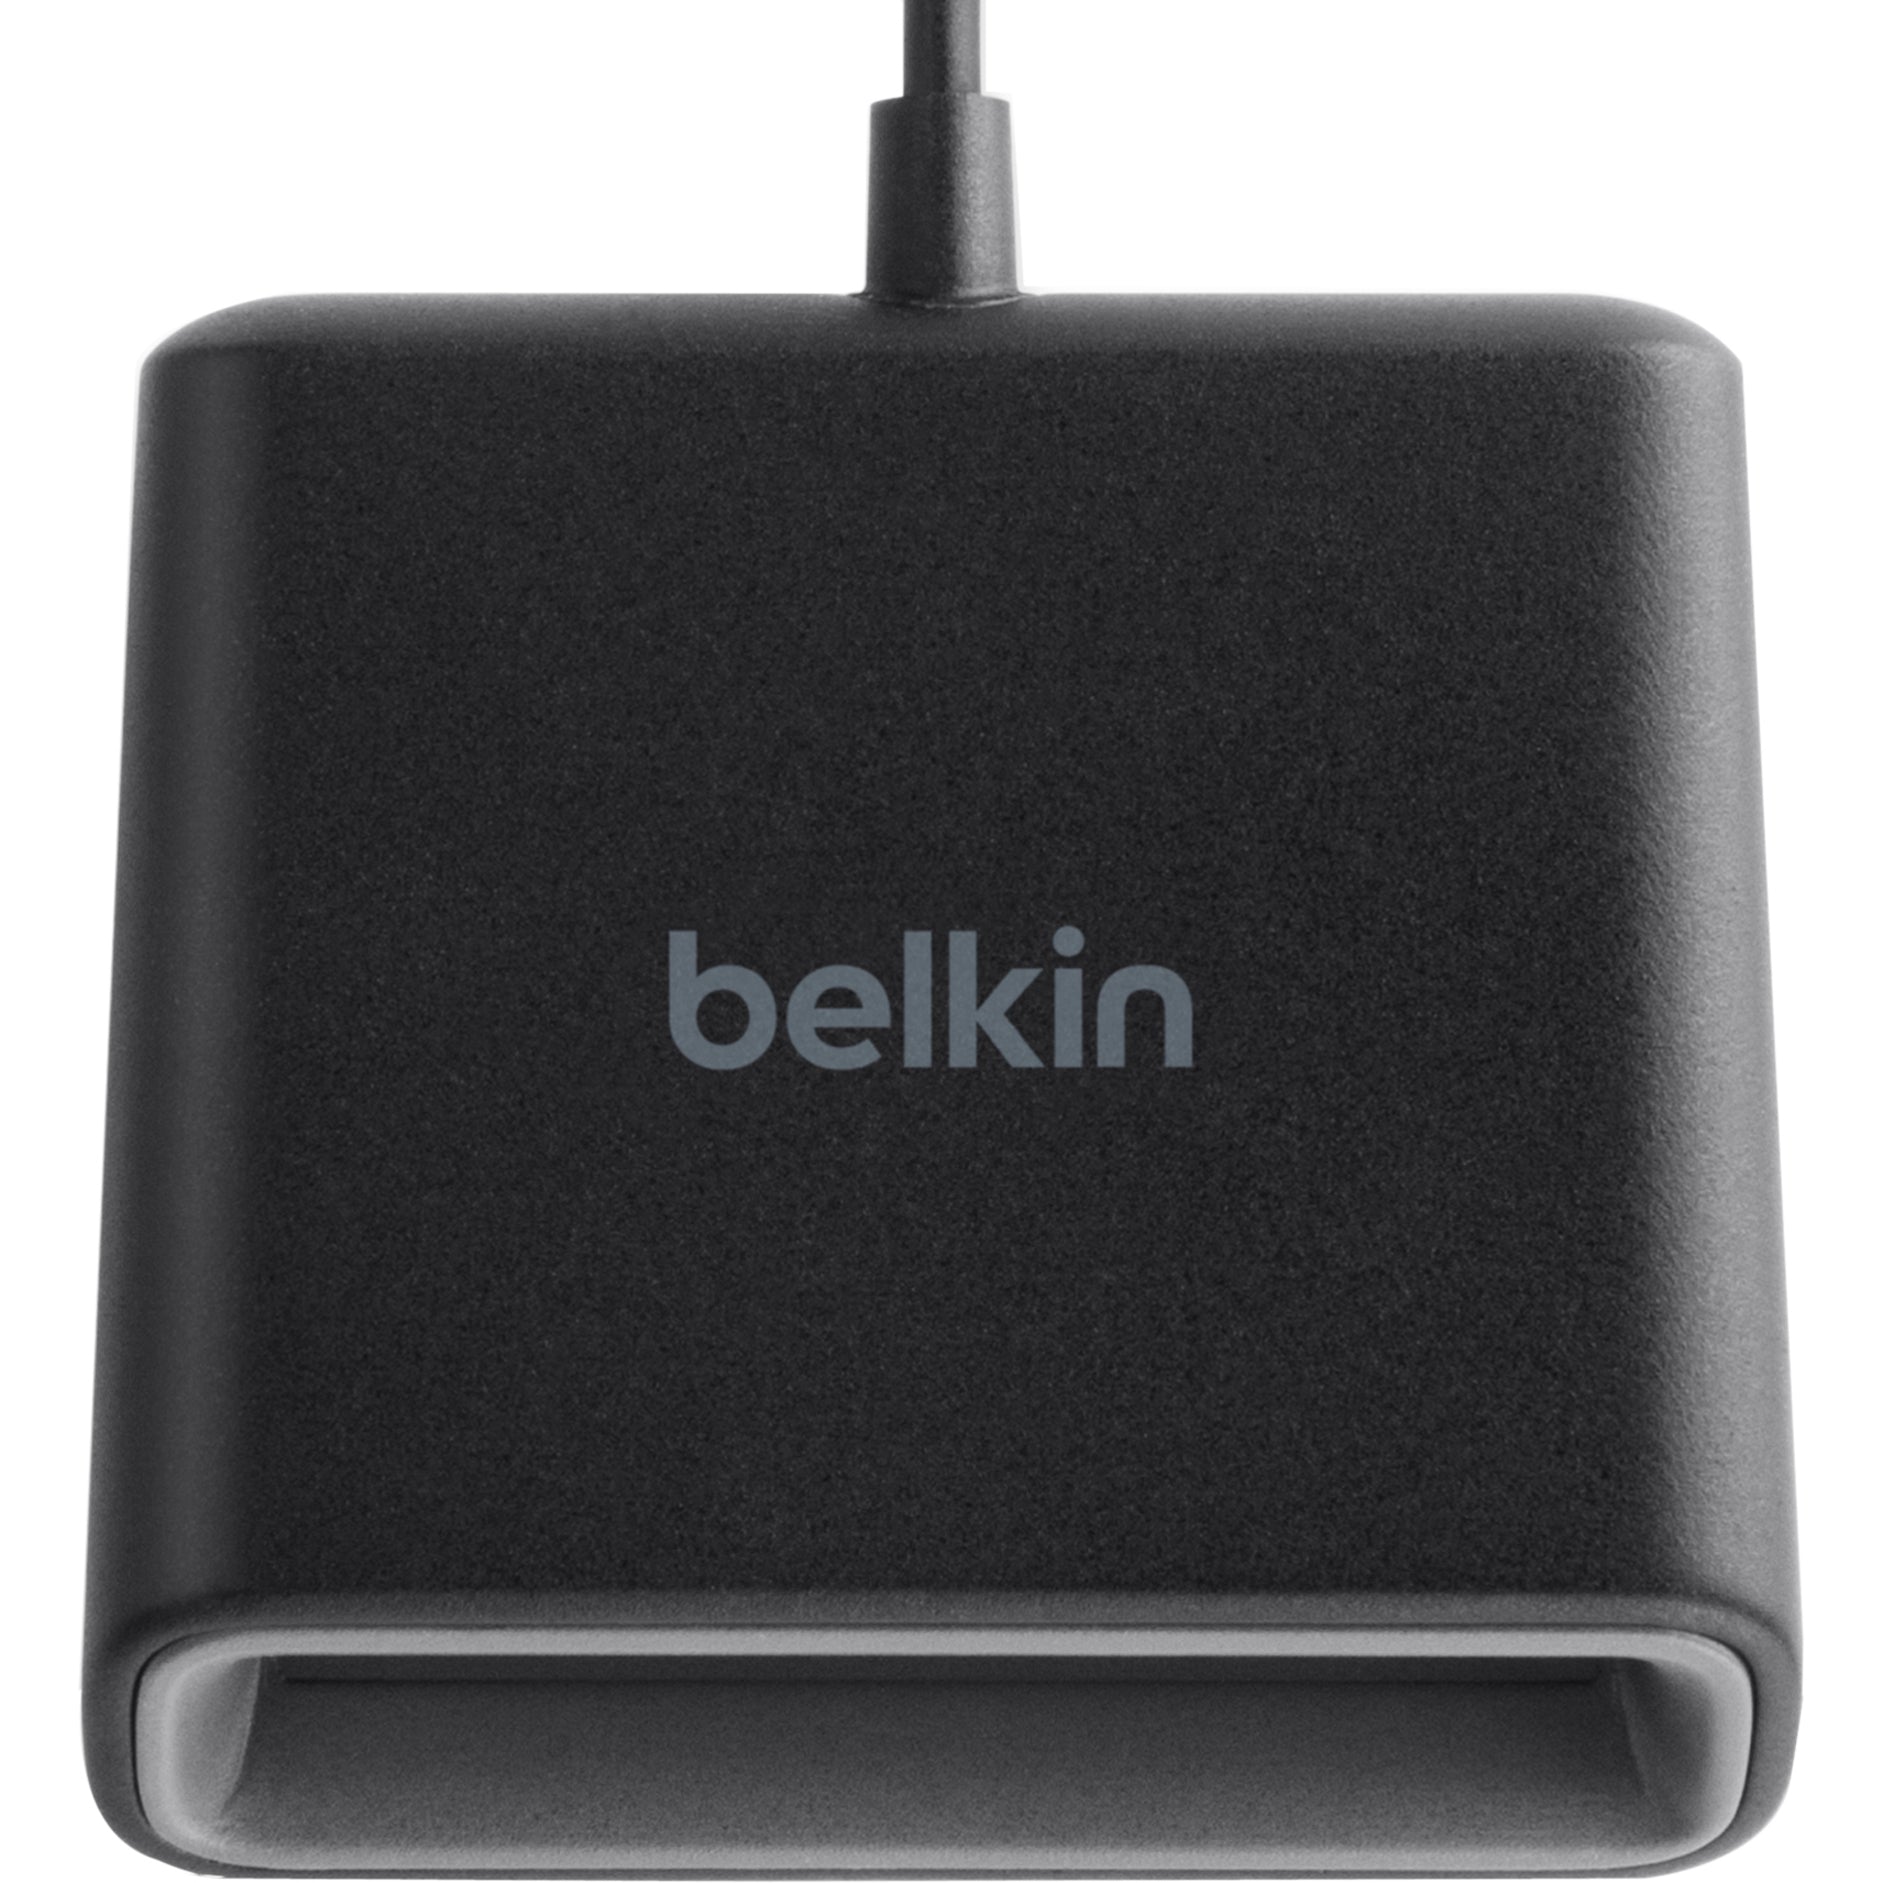 Belkin F1DN005U Smart Card Reader, USB Cable, TAA Compliant